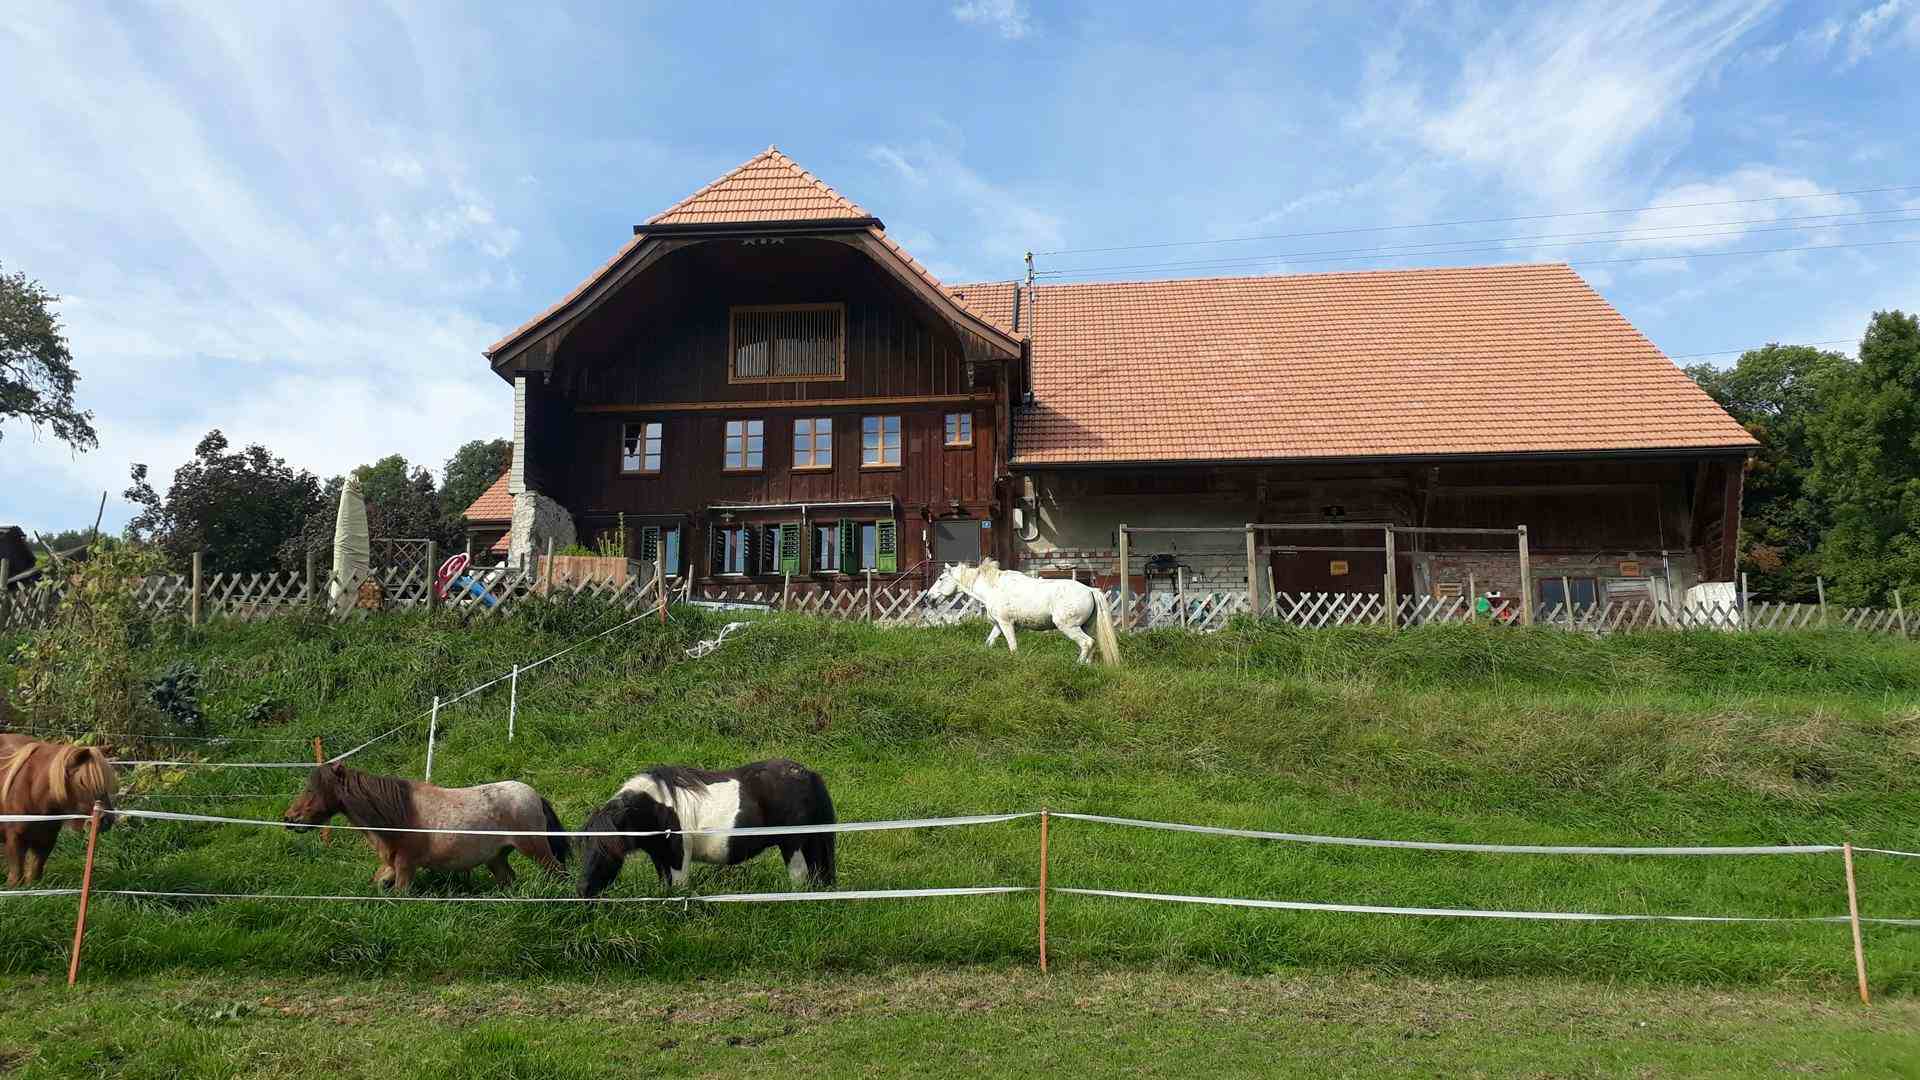 Muhof, produttore nel Gstaad canton Berne in Svizzera